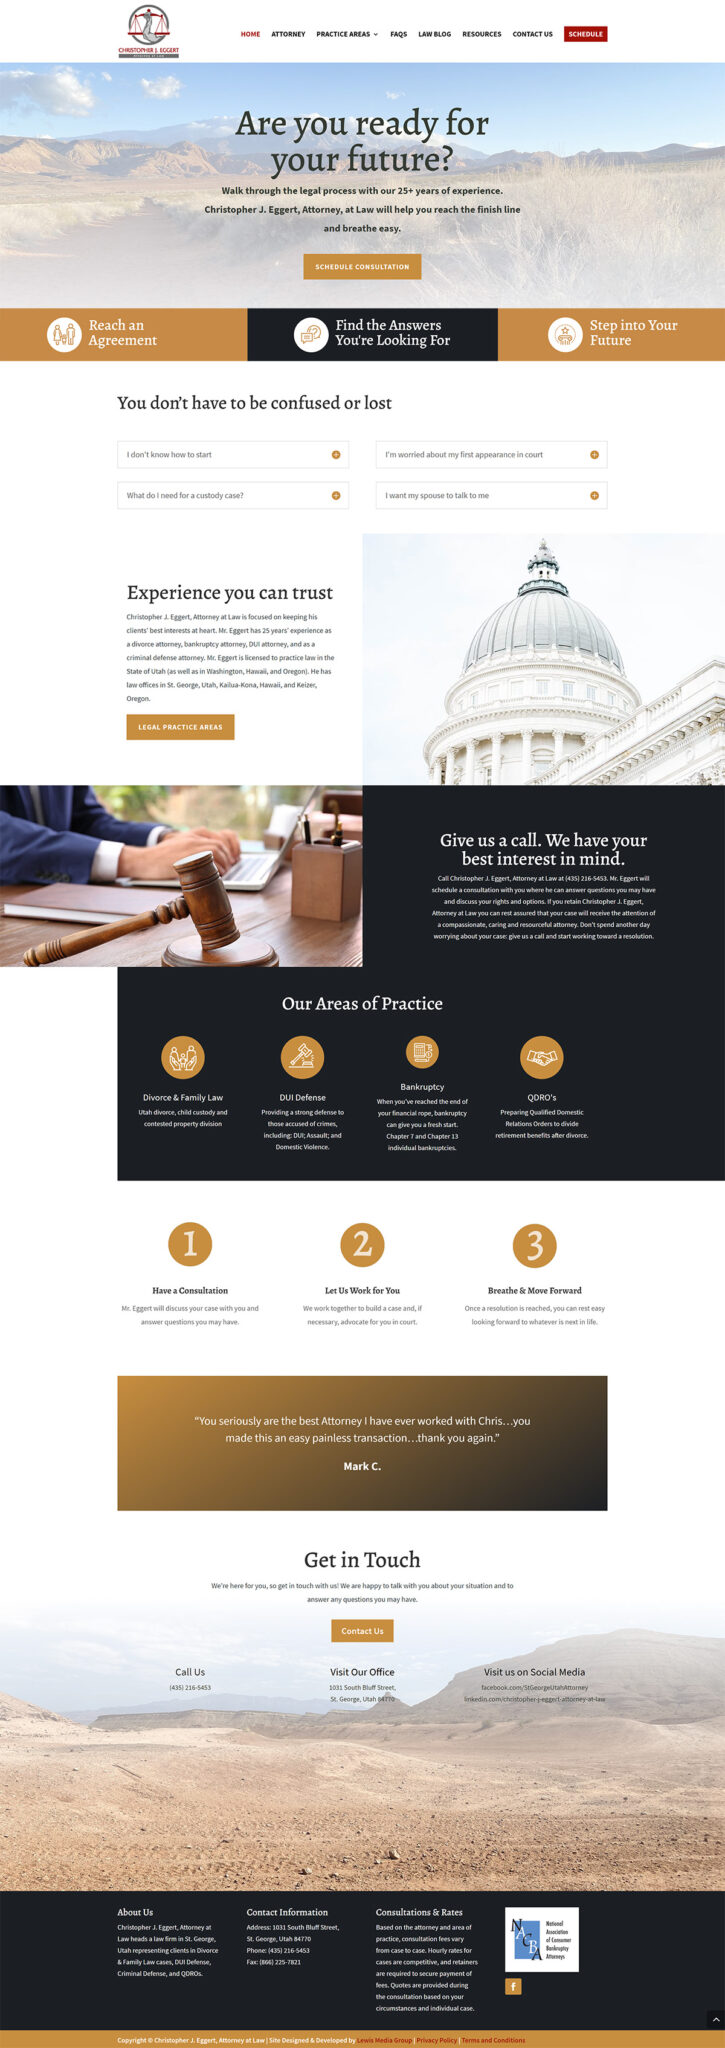 Christopher J. Eggert Home page after new design